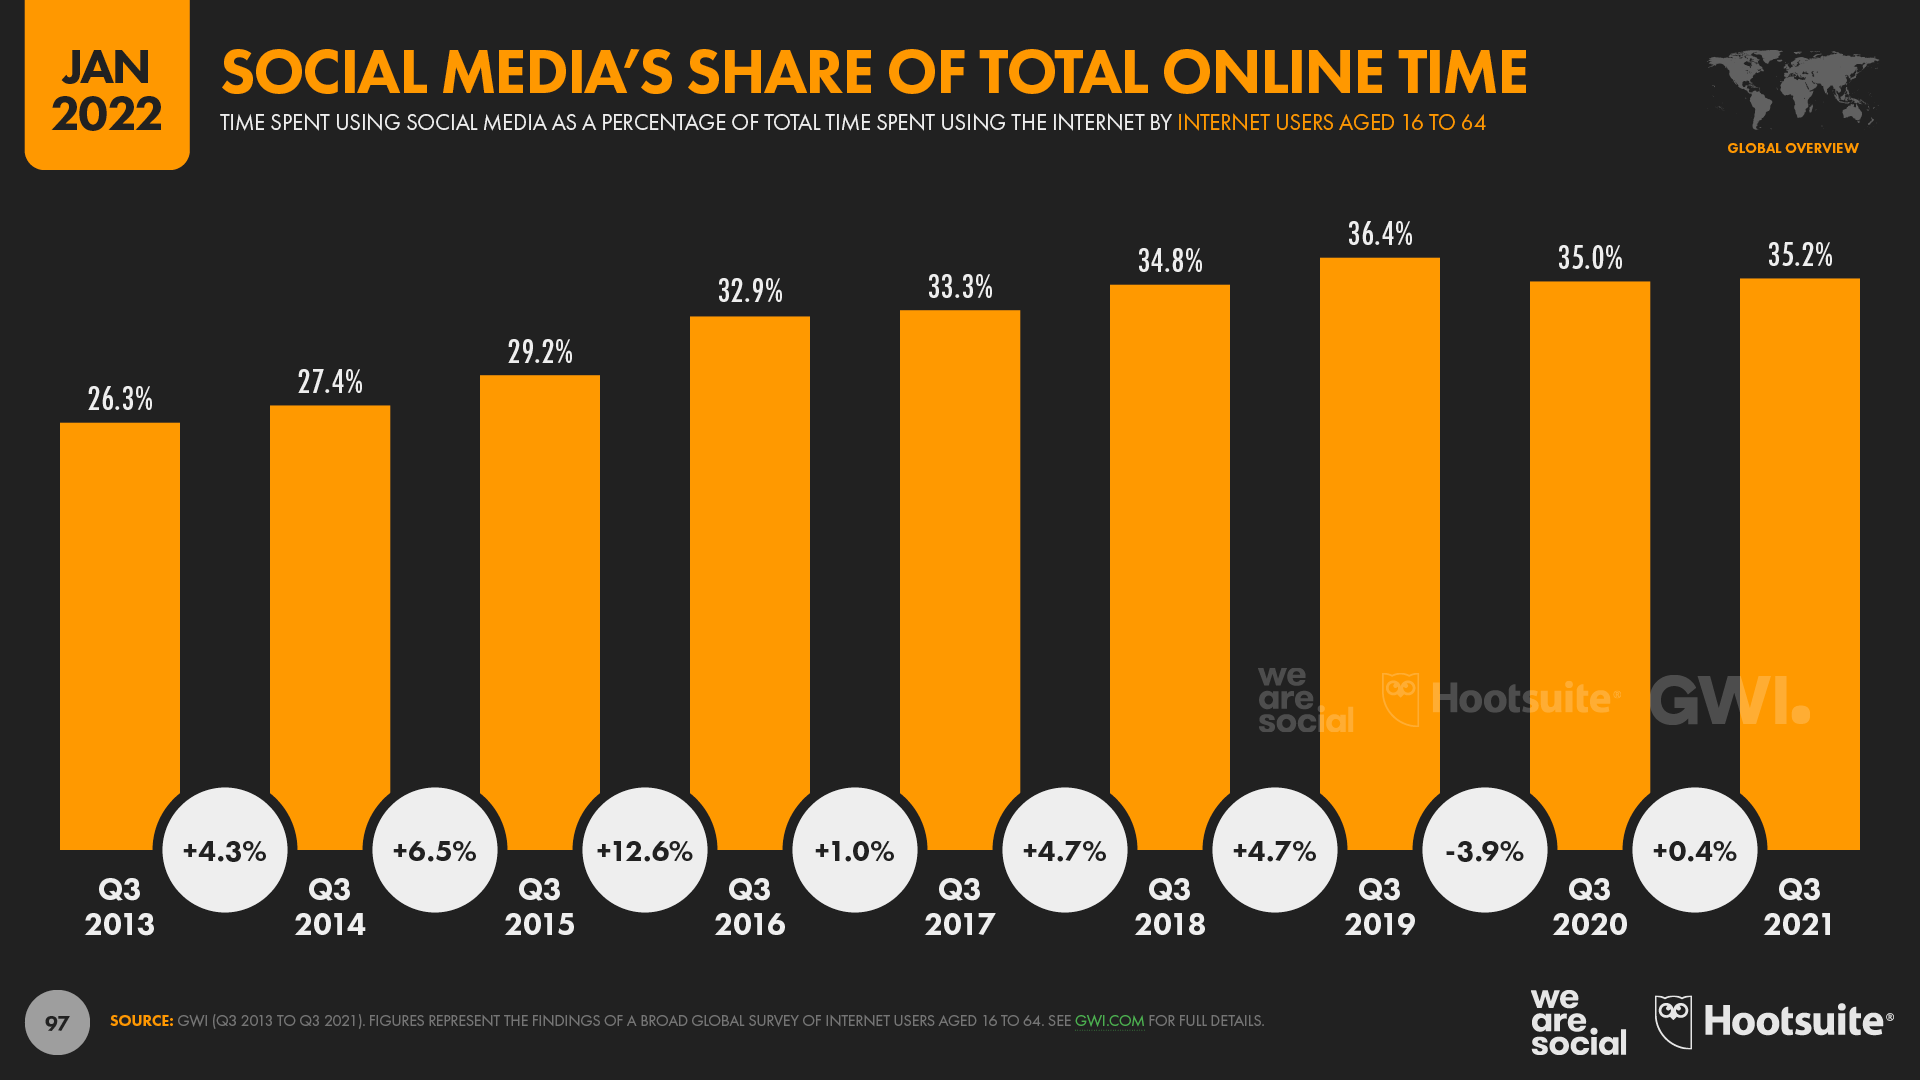 Social media's share of total online time